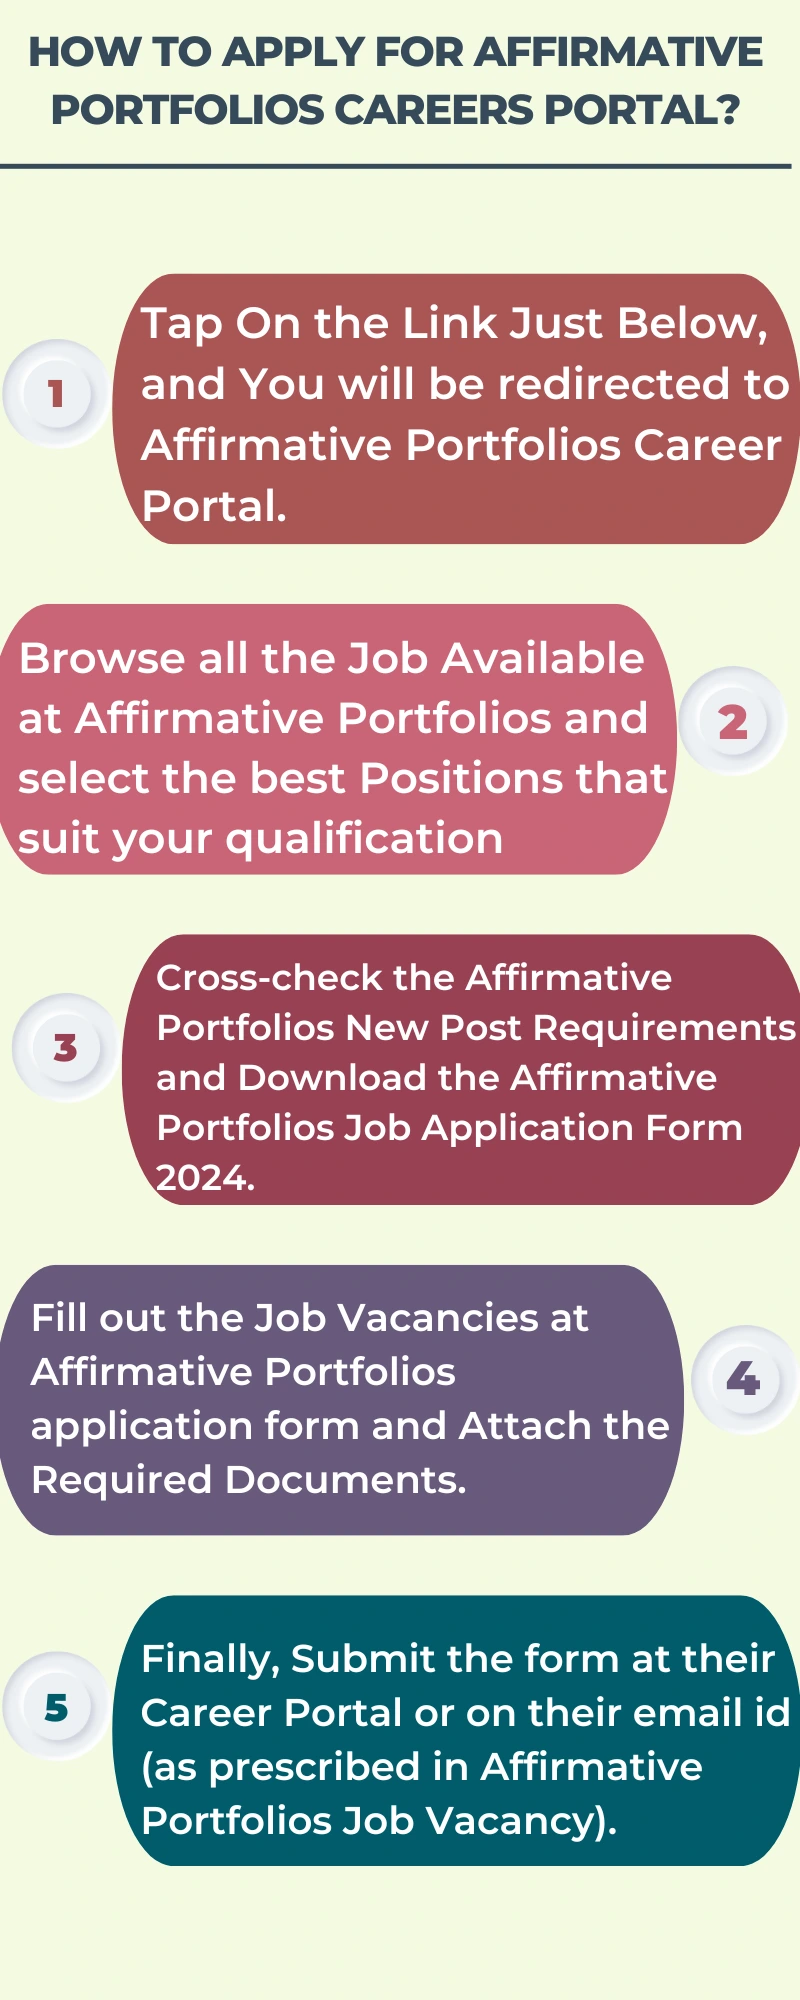 How To Apply for Affirmative Portfolios Careers Portal?